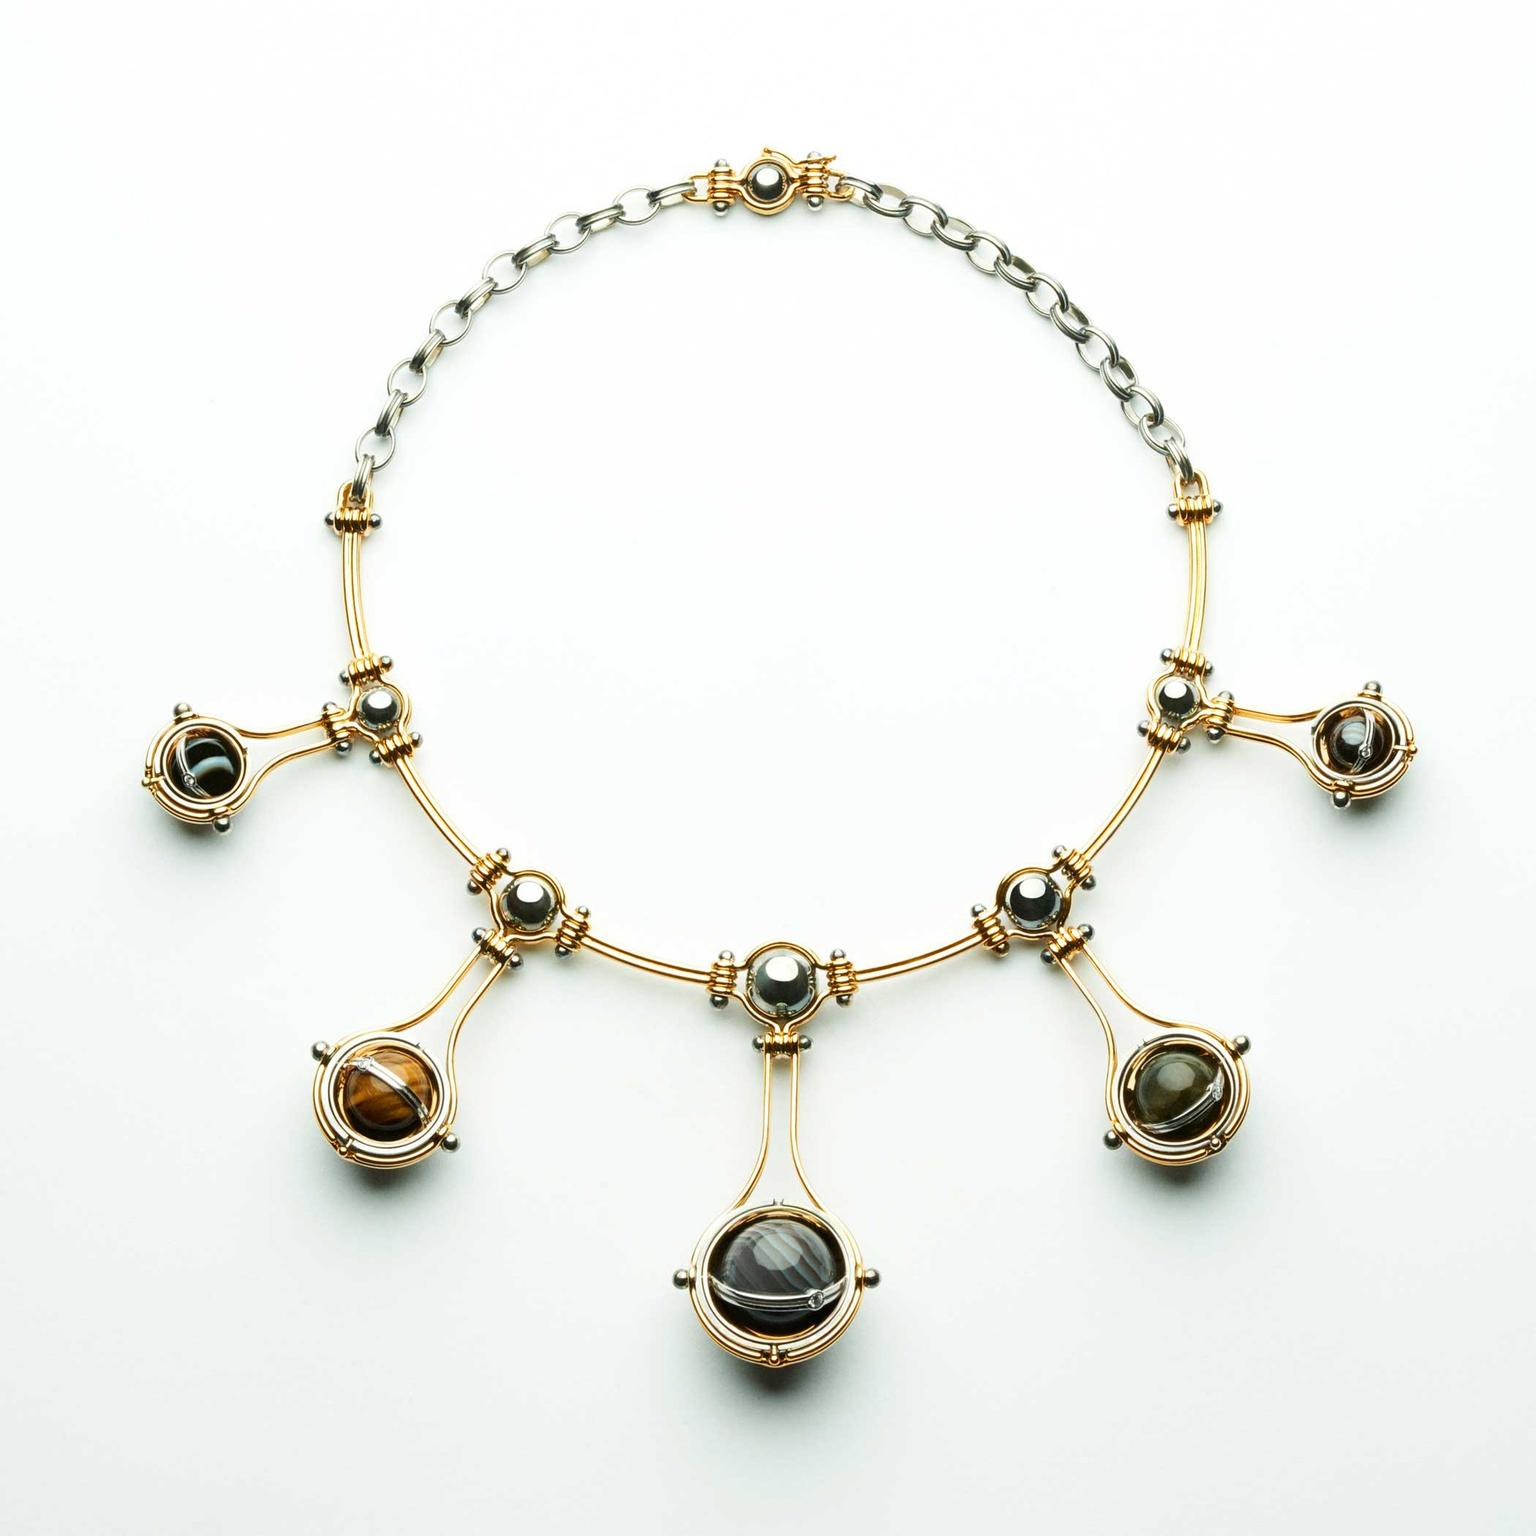 Louis Vuitton Satellite Galaxy Chain Logo necklace features silver